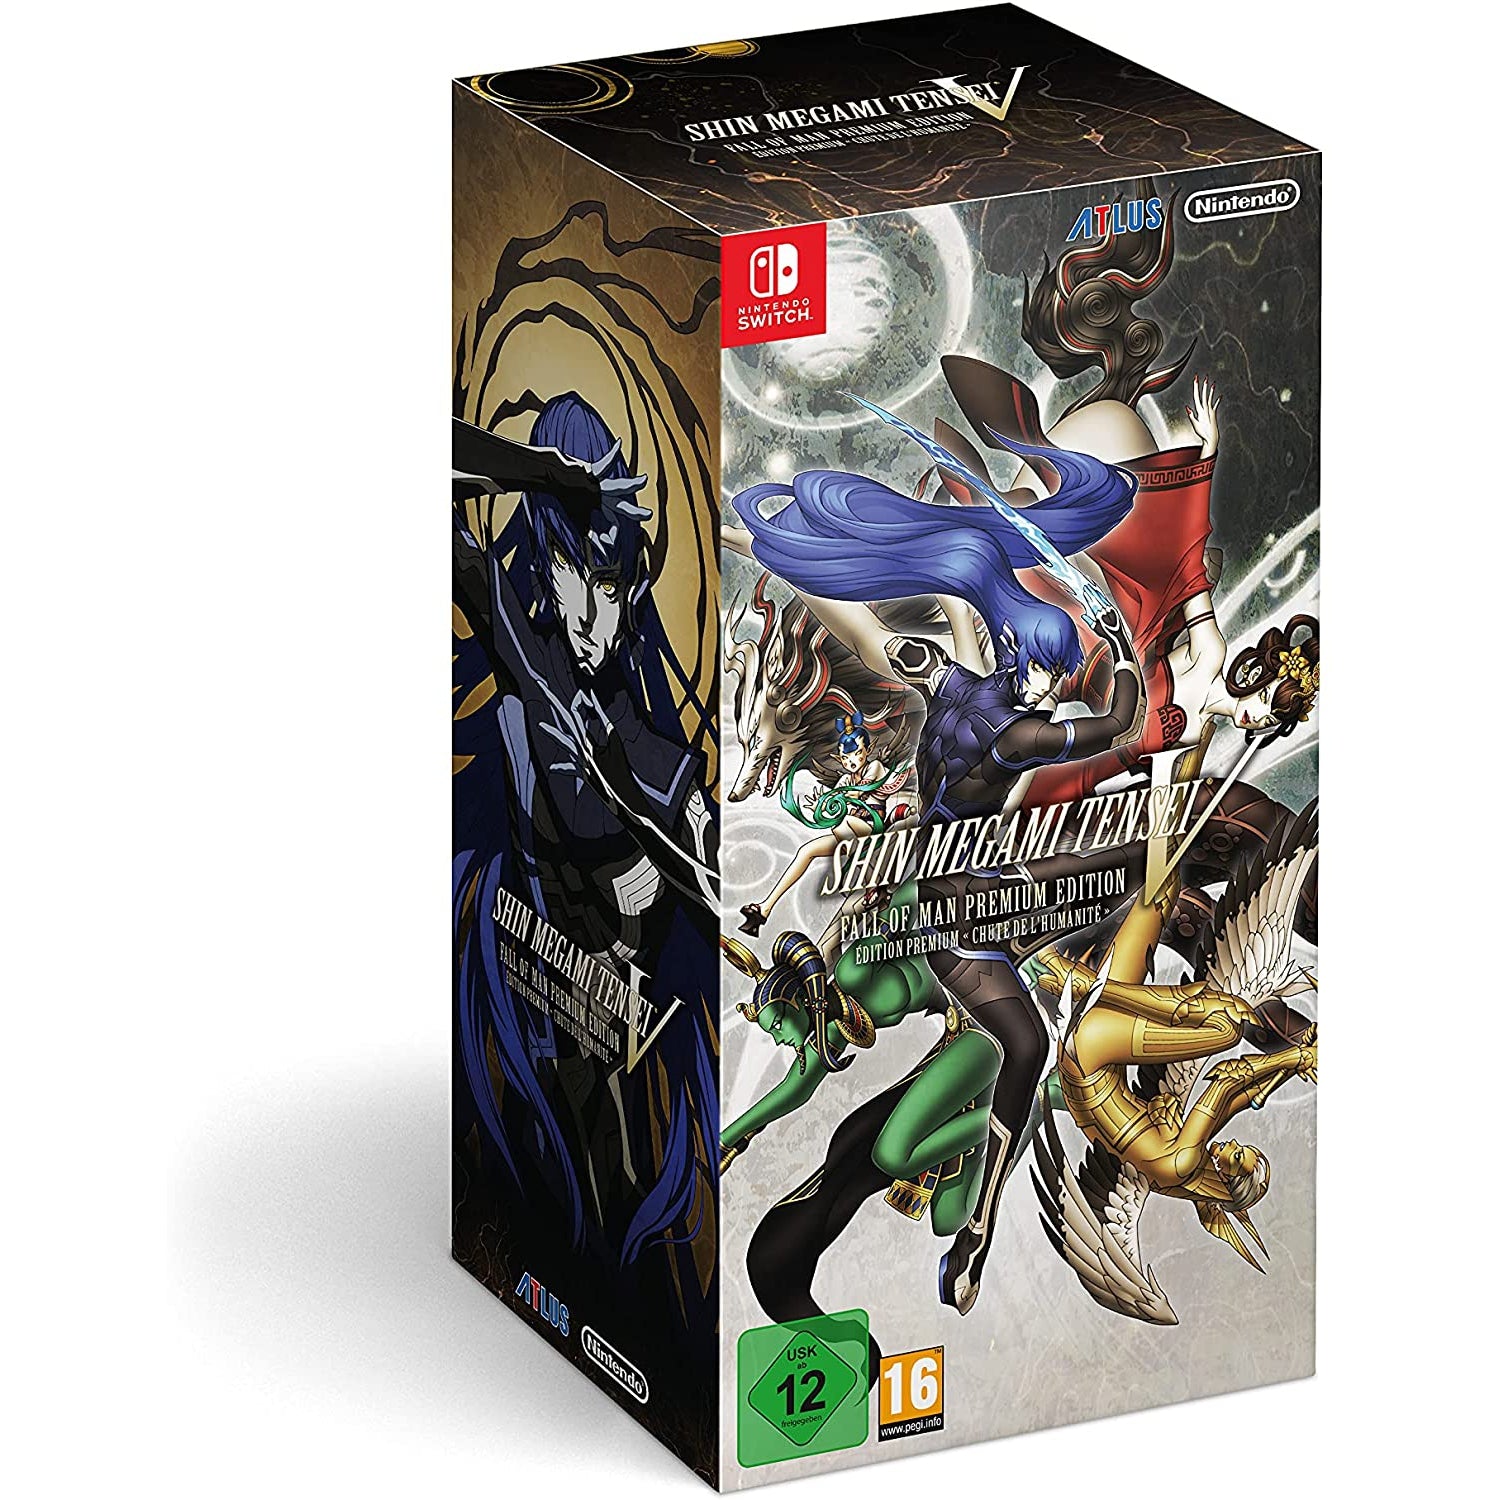 Shin Megami Tensei V Fall of Man Premium Edition (Nintendo Switch)